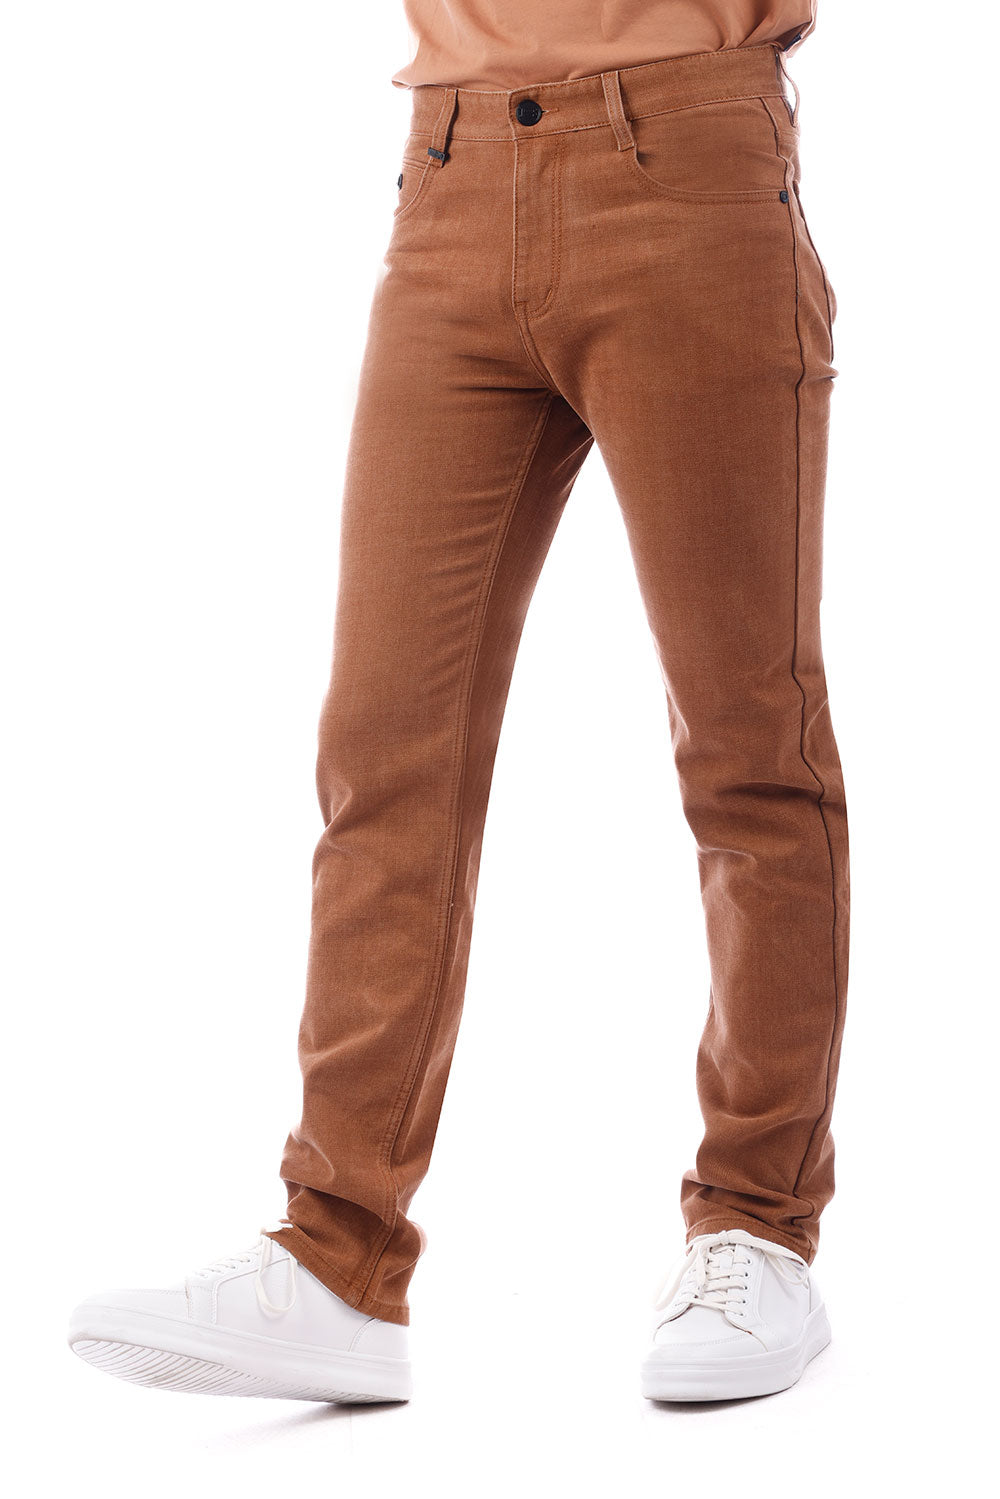 Barabas Men's Solid Color Premium Stretch Denim Jeans 3SN100 Rust